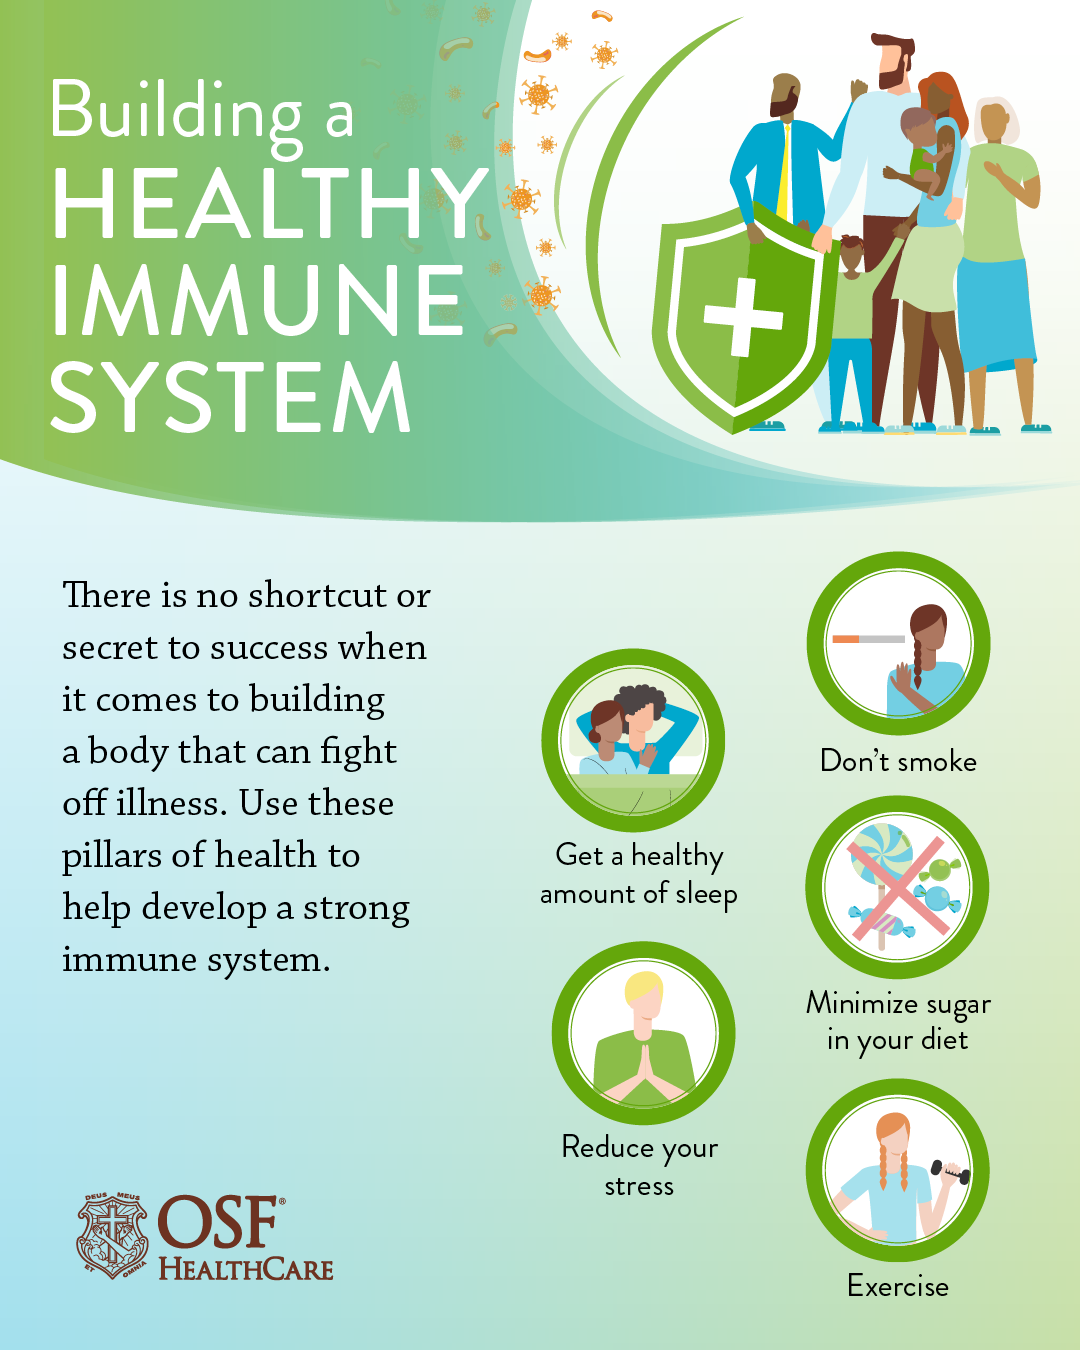 Immune system strength